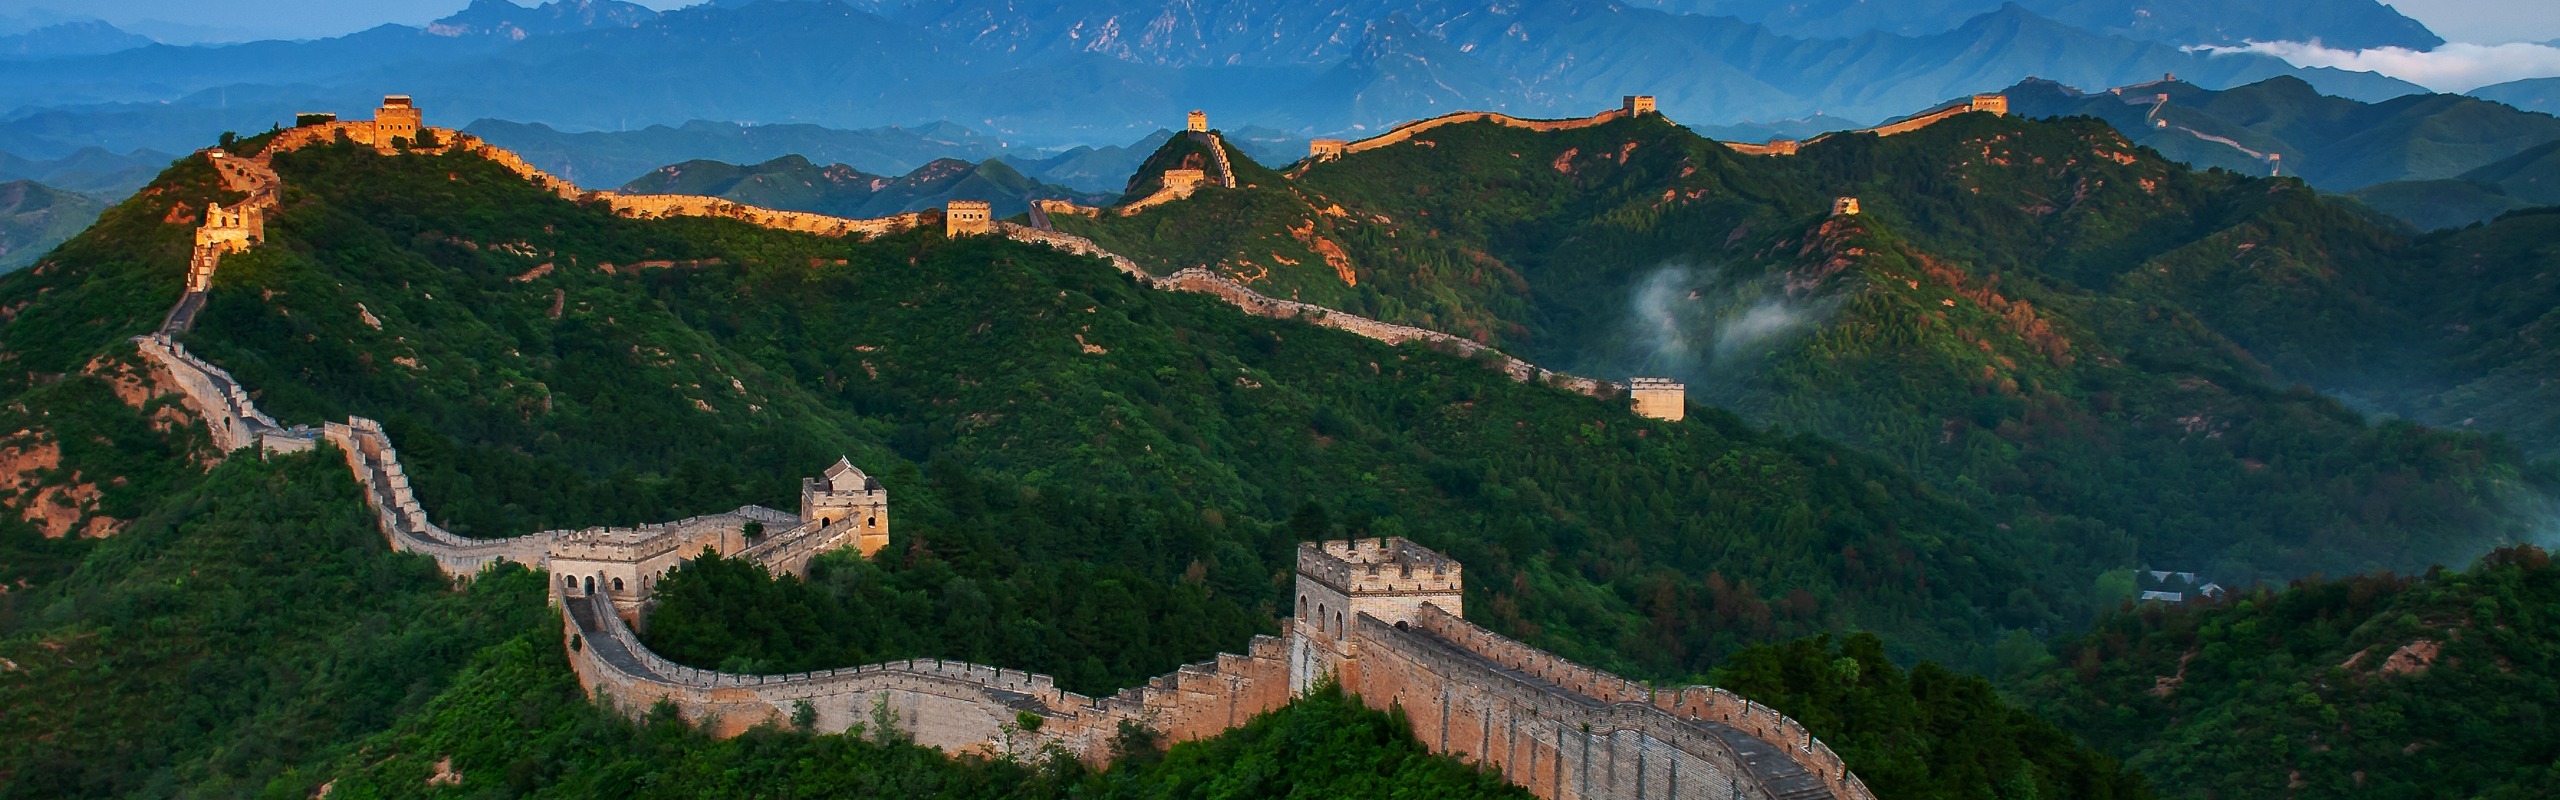 One Day Jinshanling Great Wall Hiking Tour